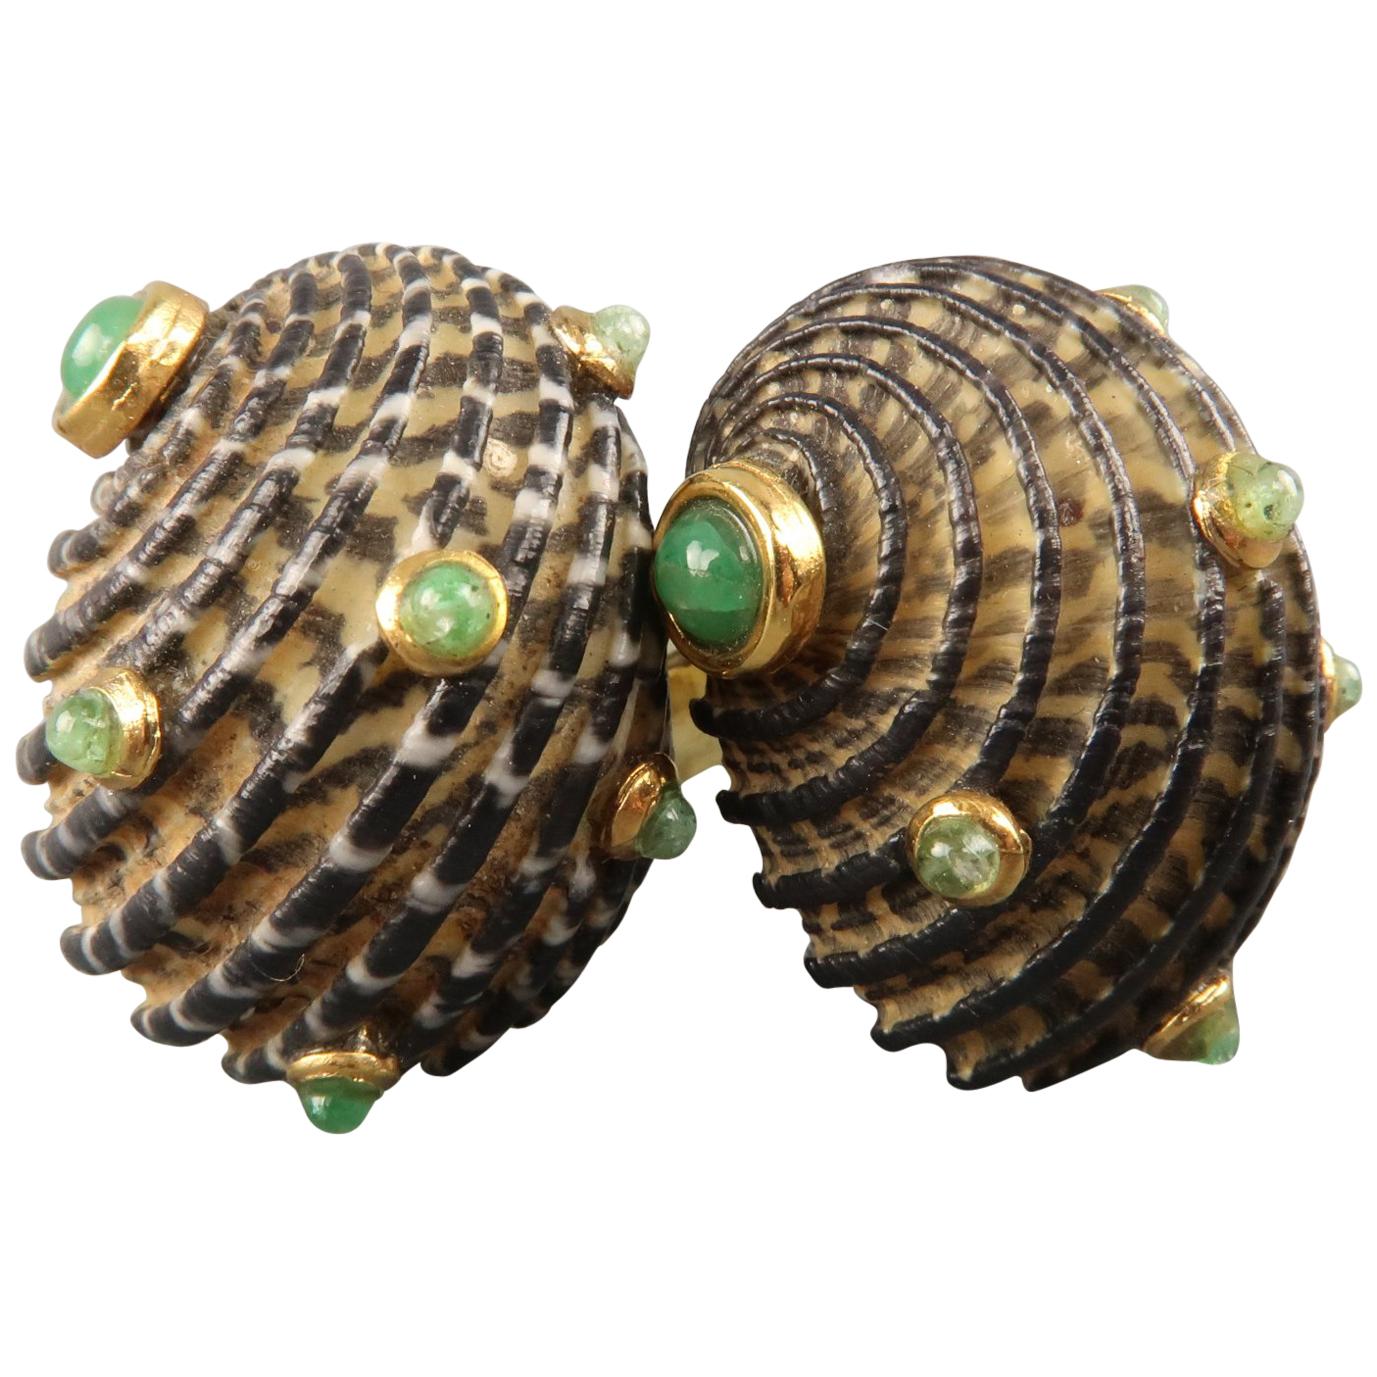 L'OREE du BOIS Clip On Earrings - Gold Tone, Green Stone on a Sea Shell 